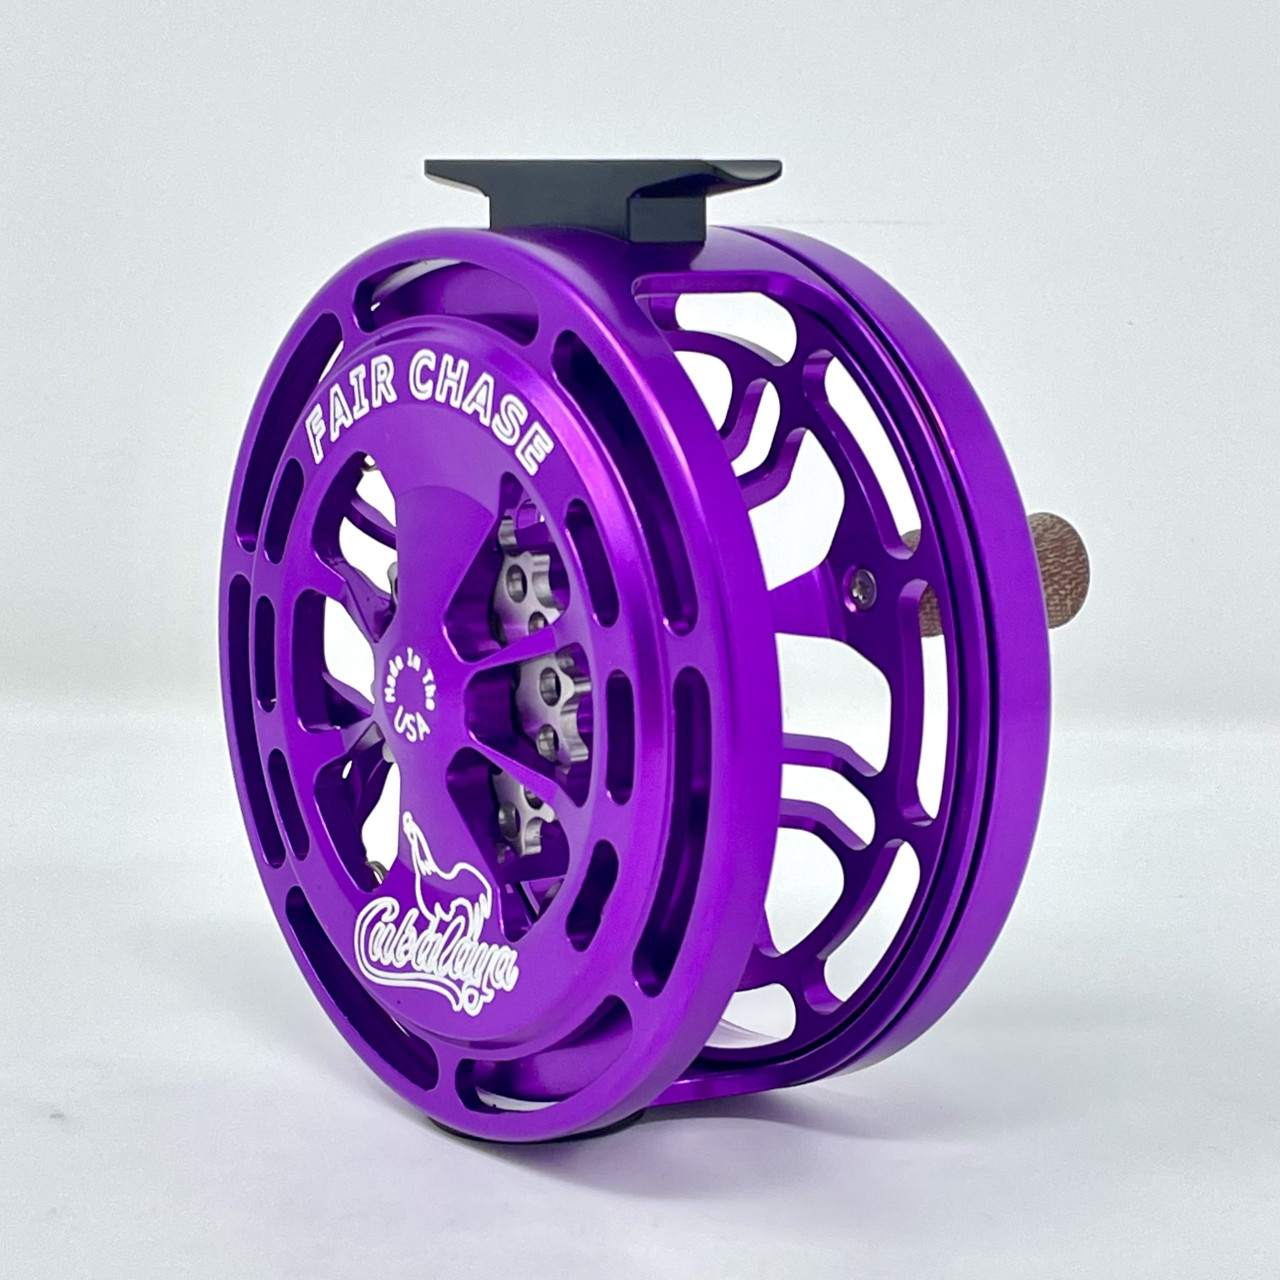 Fair Chase G2s Click Pawl Fly Reel-Purple on Purple - Cubalaya